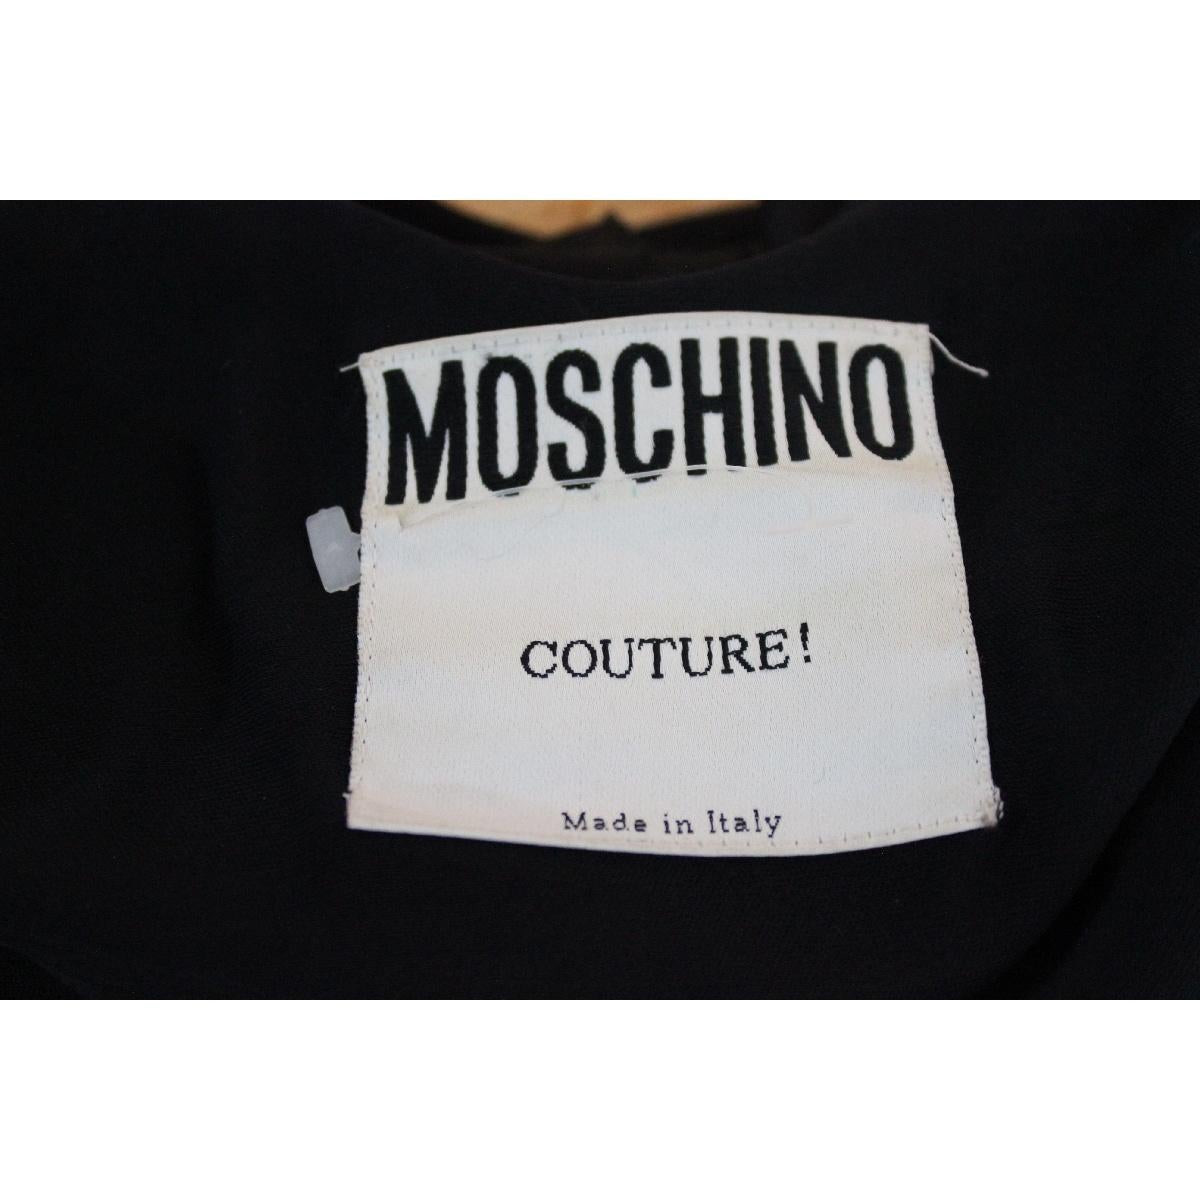 Women's 1990s Moschino Couture Dress Charleston Vintage Cotton Blue Beige Fringes